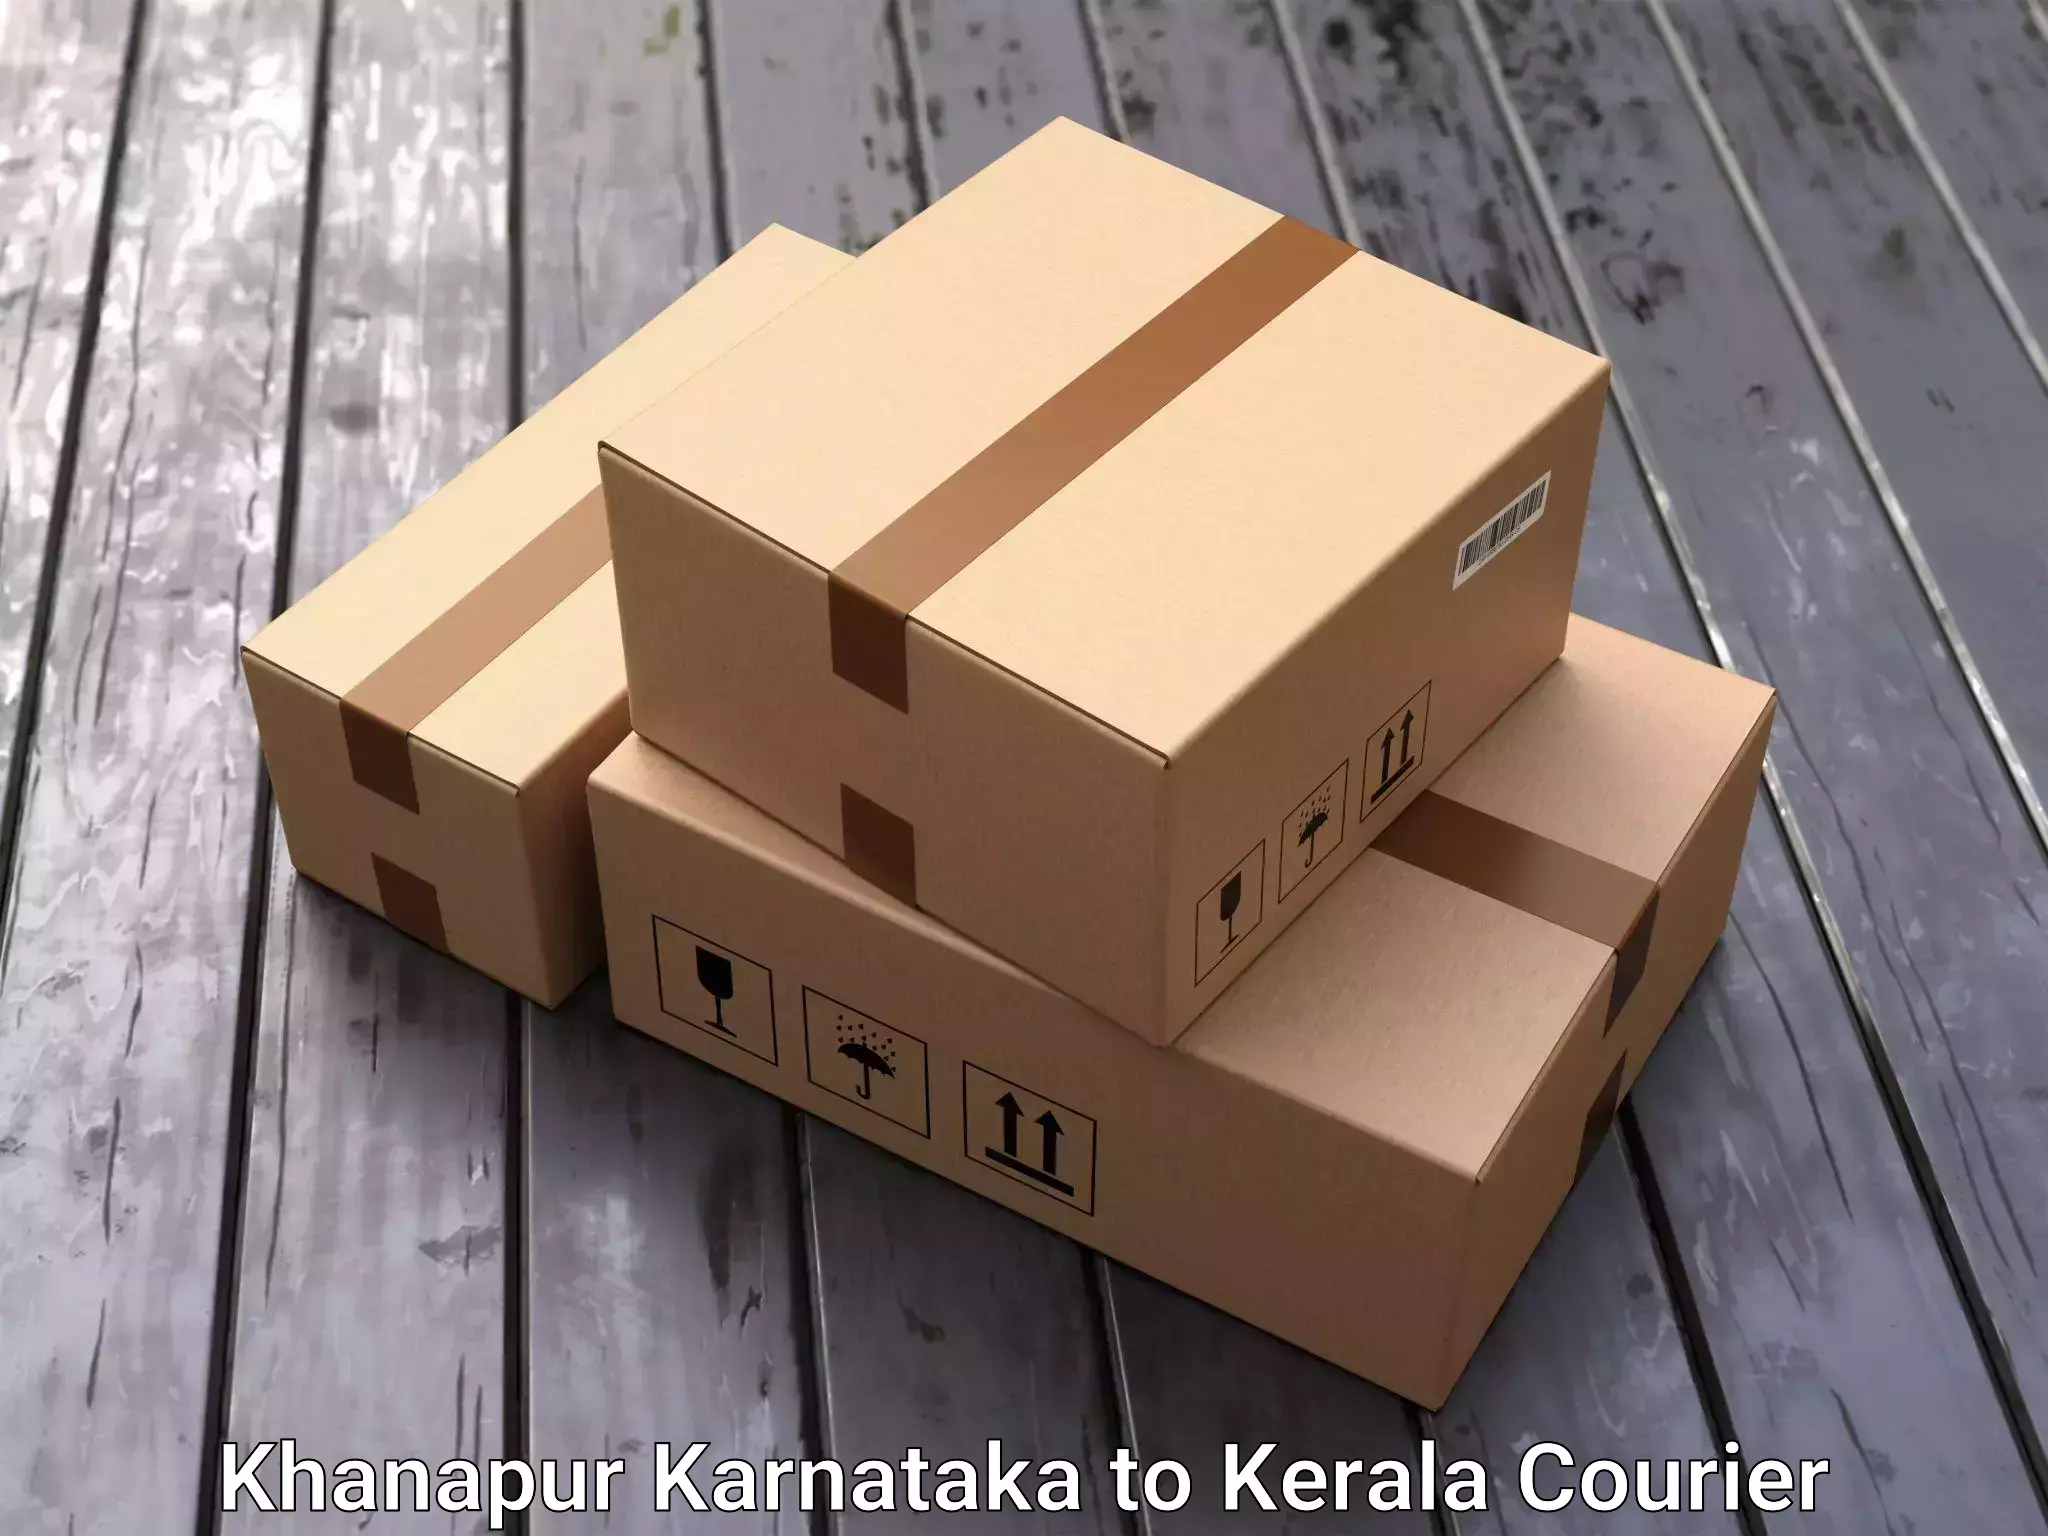 Furniture delivery service Khanapur Karnataka to Kannur